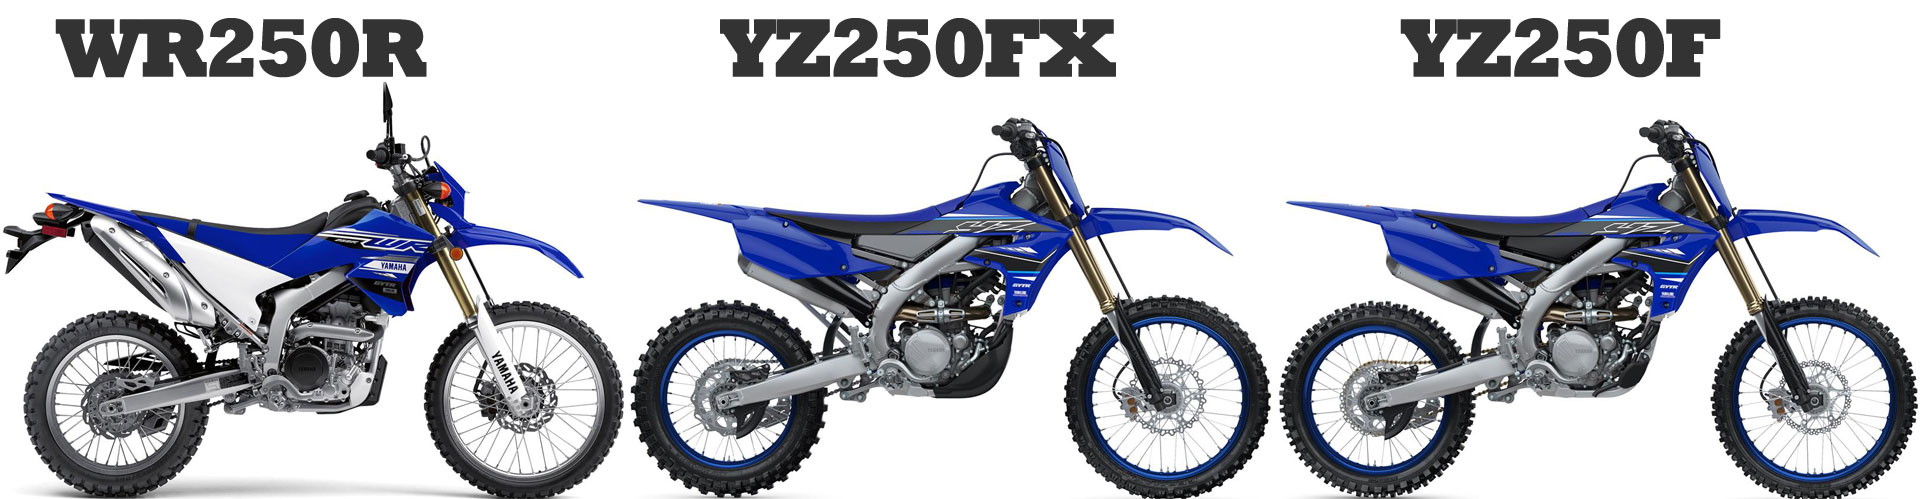 Yamaha WR250R vs YZ250F vs YZ250FX